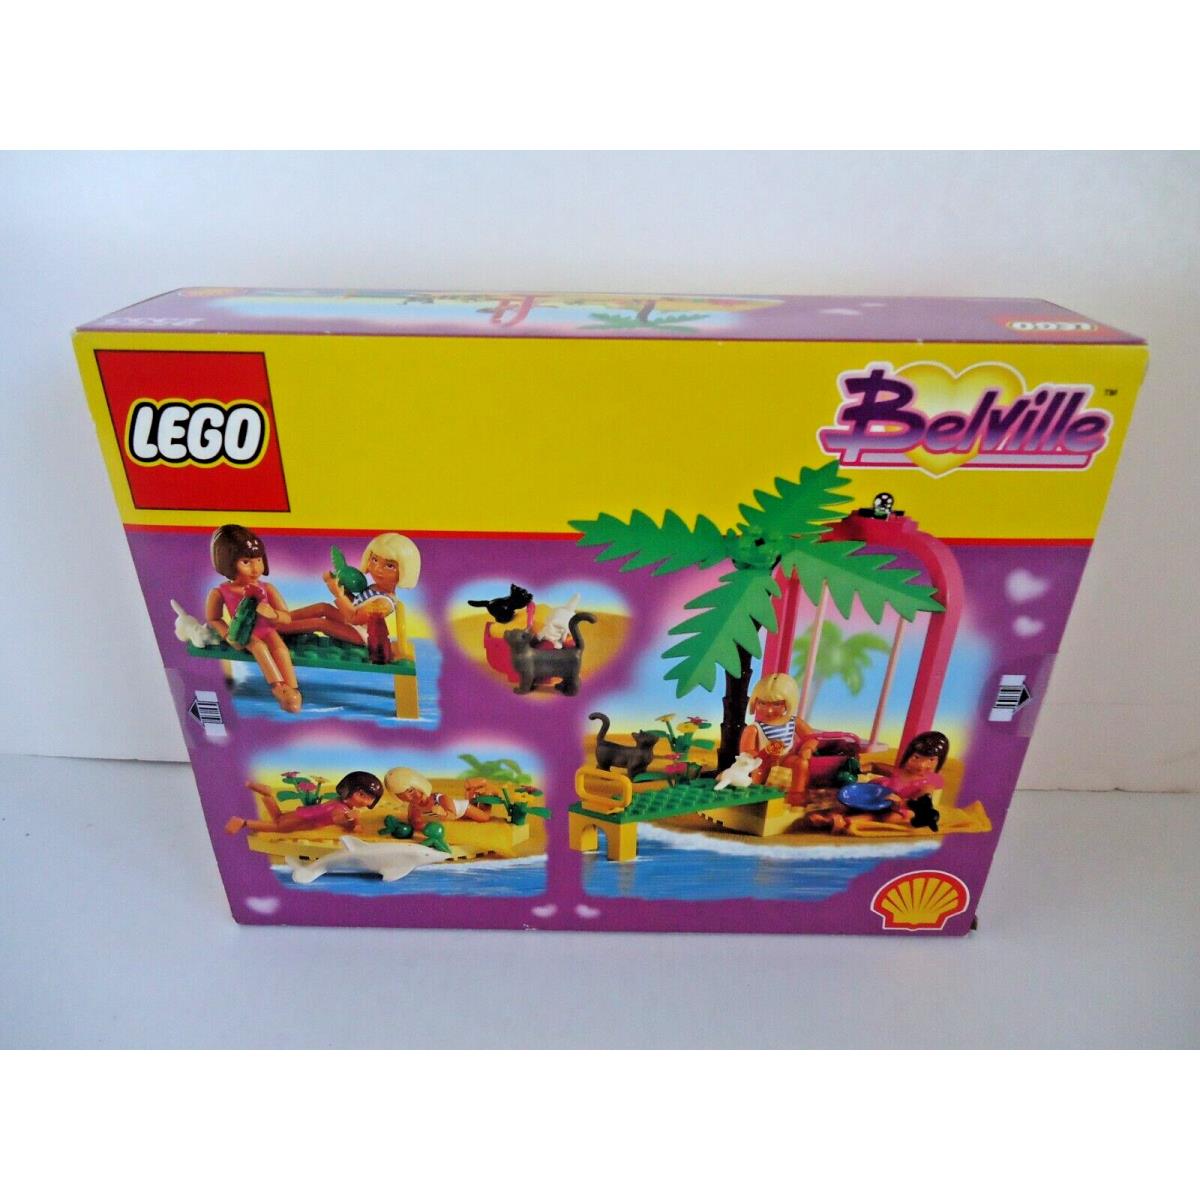 Lego Shell Promotional Set 2555 Belville Swing Set